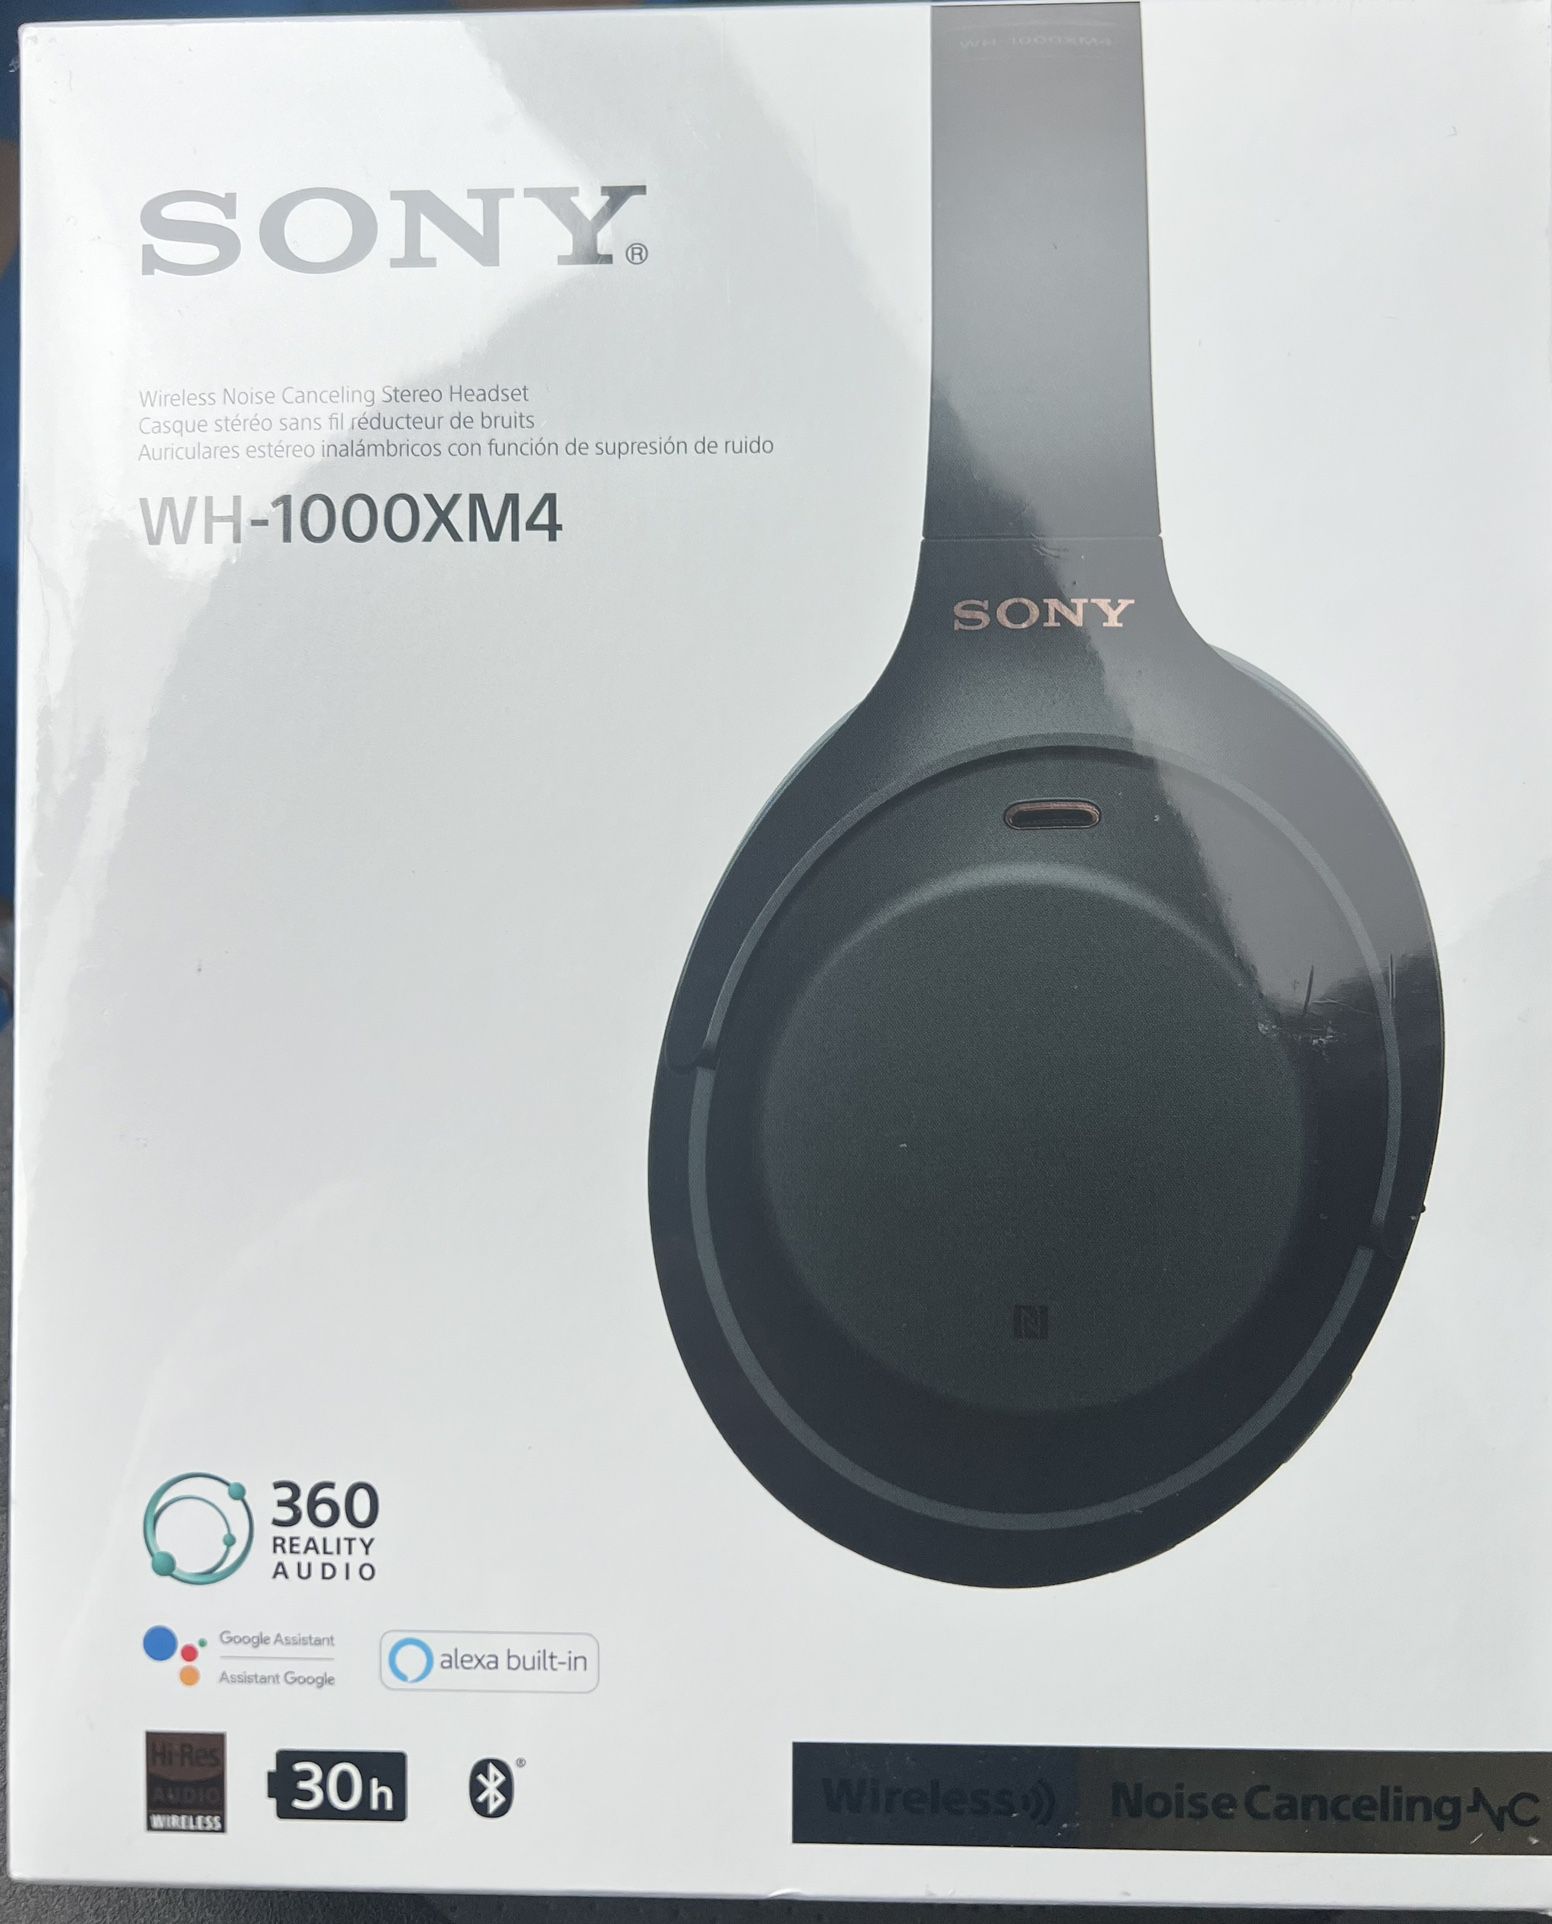 Sony WH-1000XM4 Wireless Premium Noise Canceling 